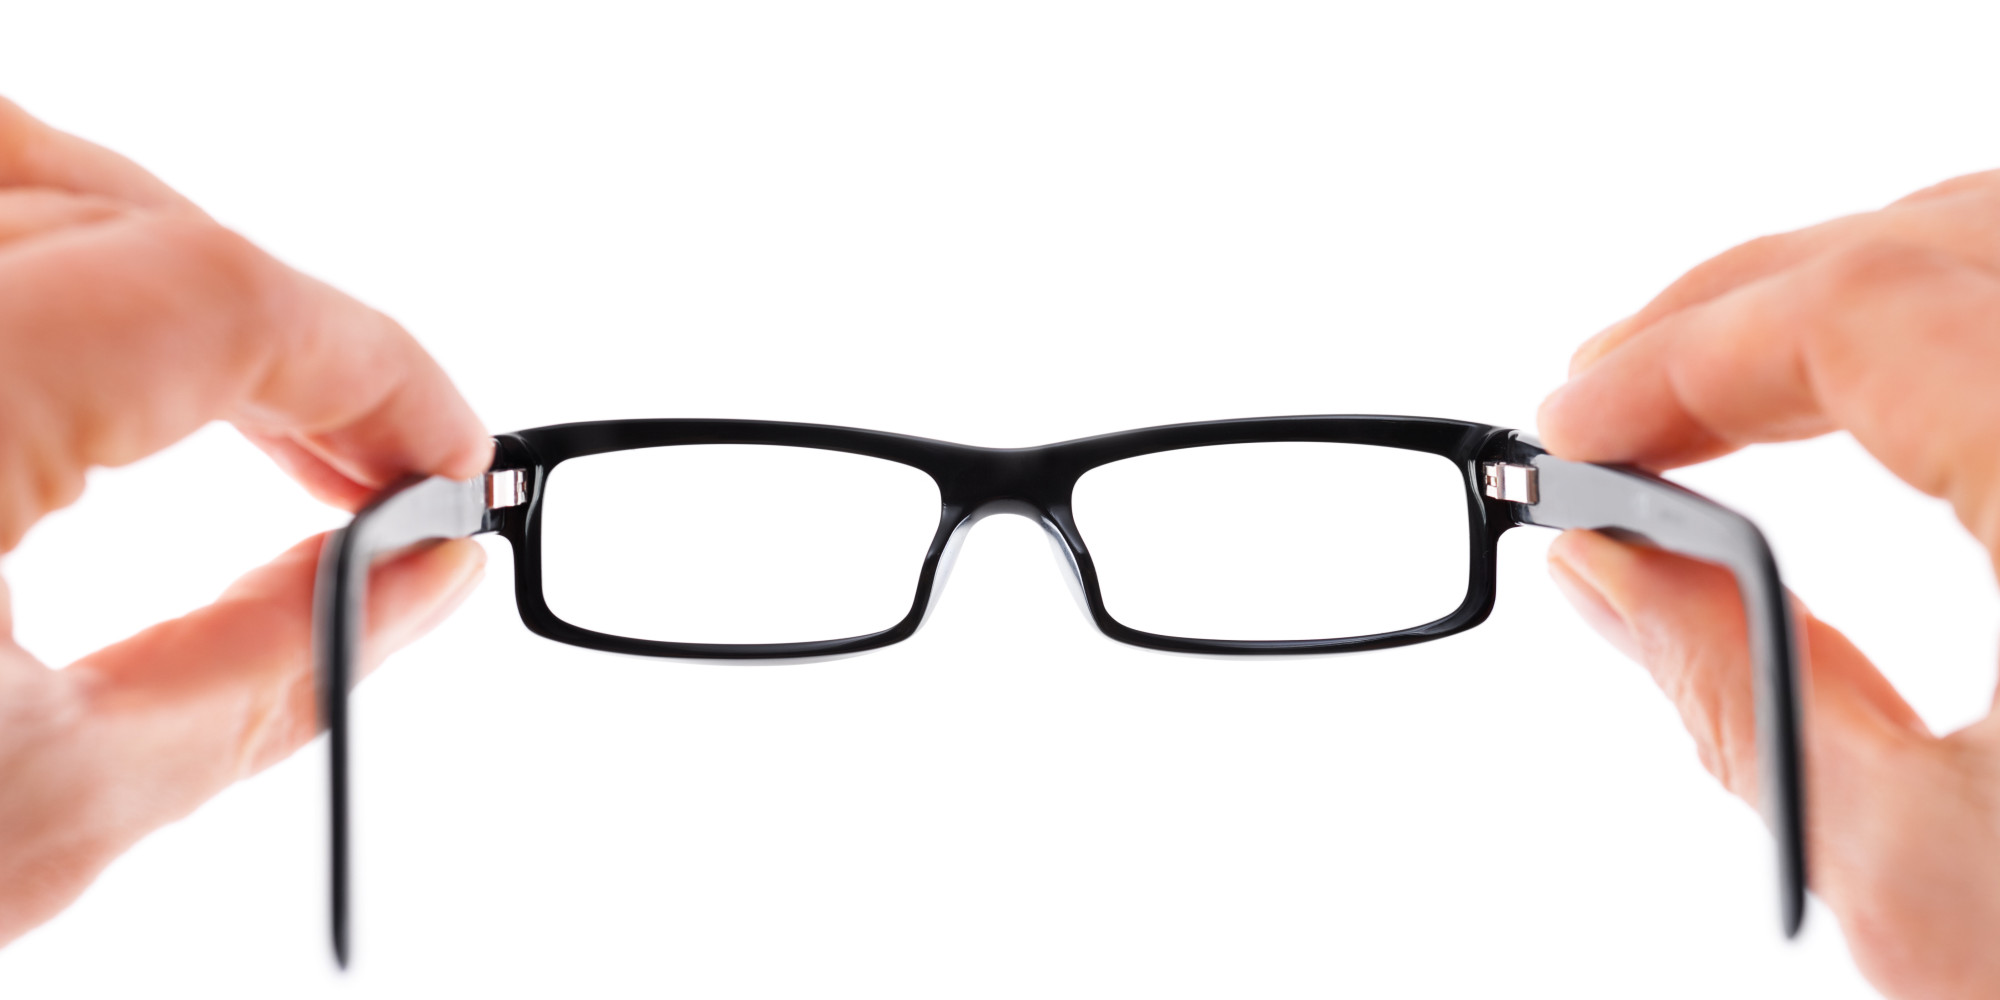 Nearsightedness Has A Far Reaching Impact As The Myopia Epidemic